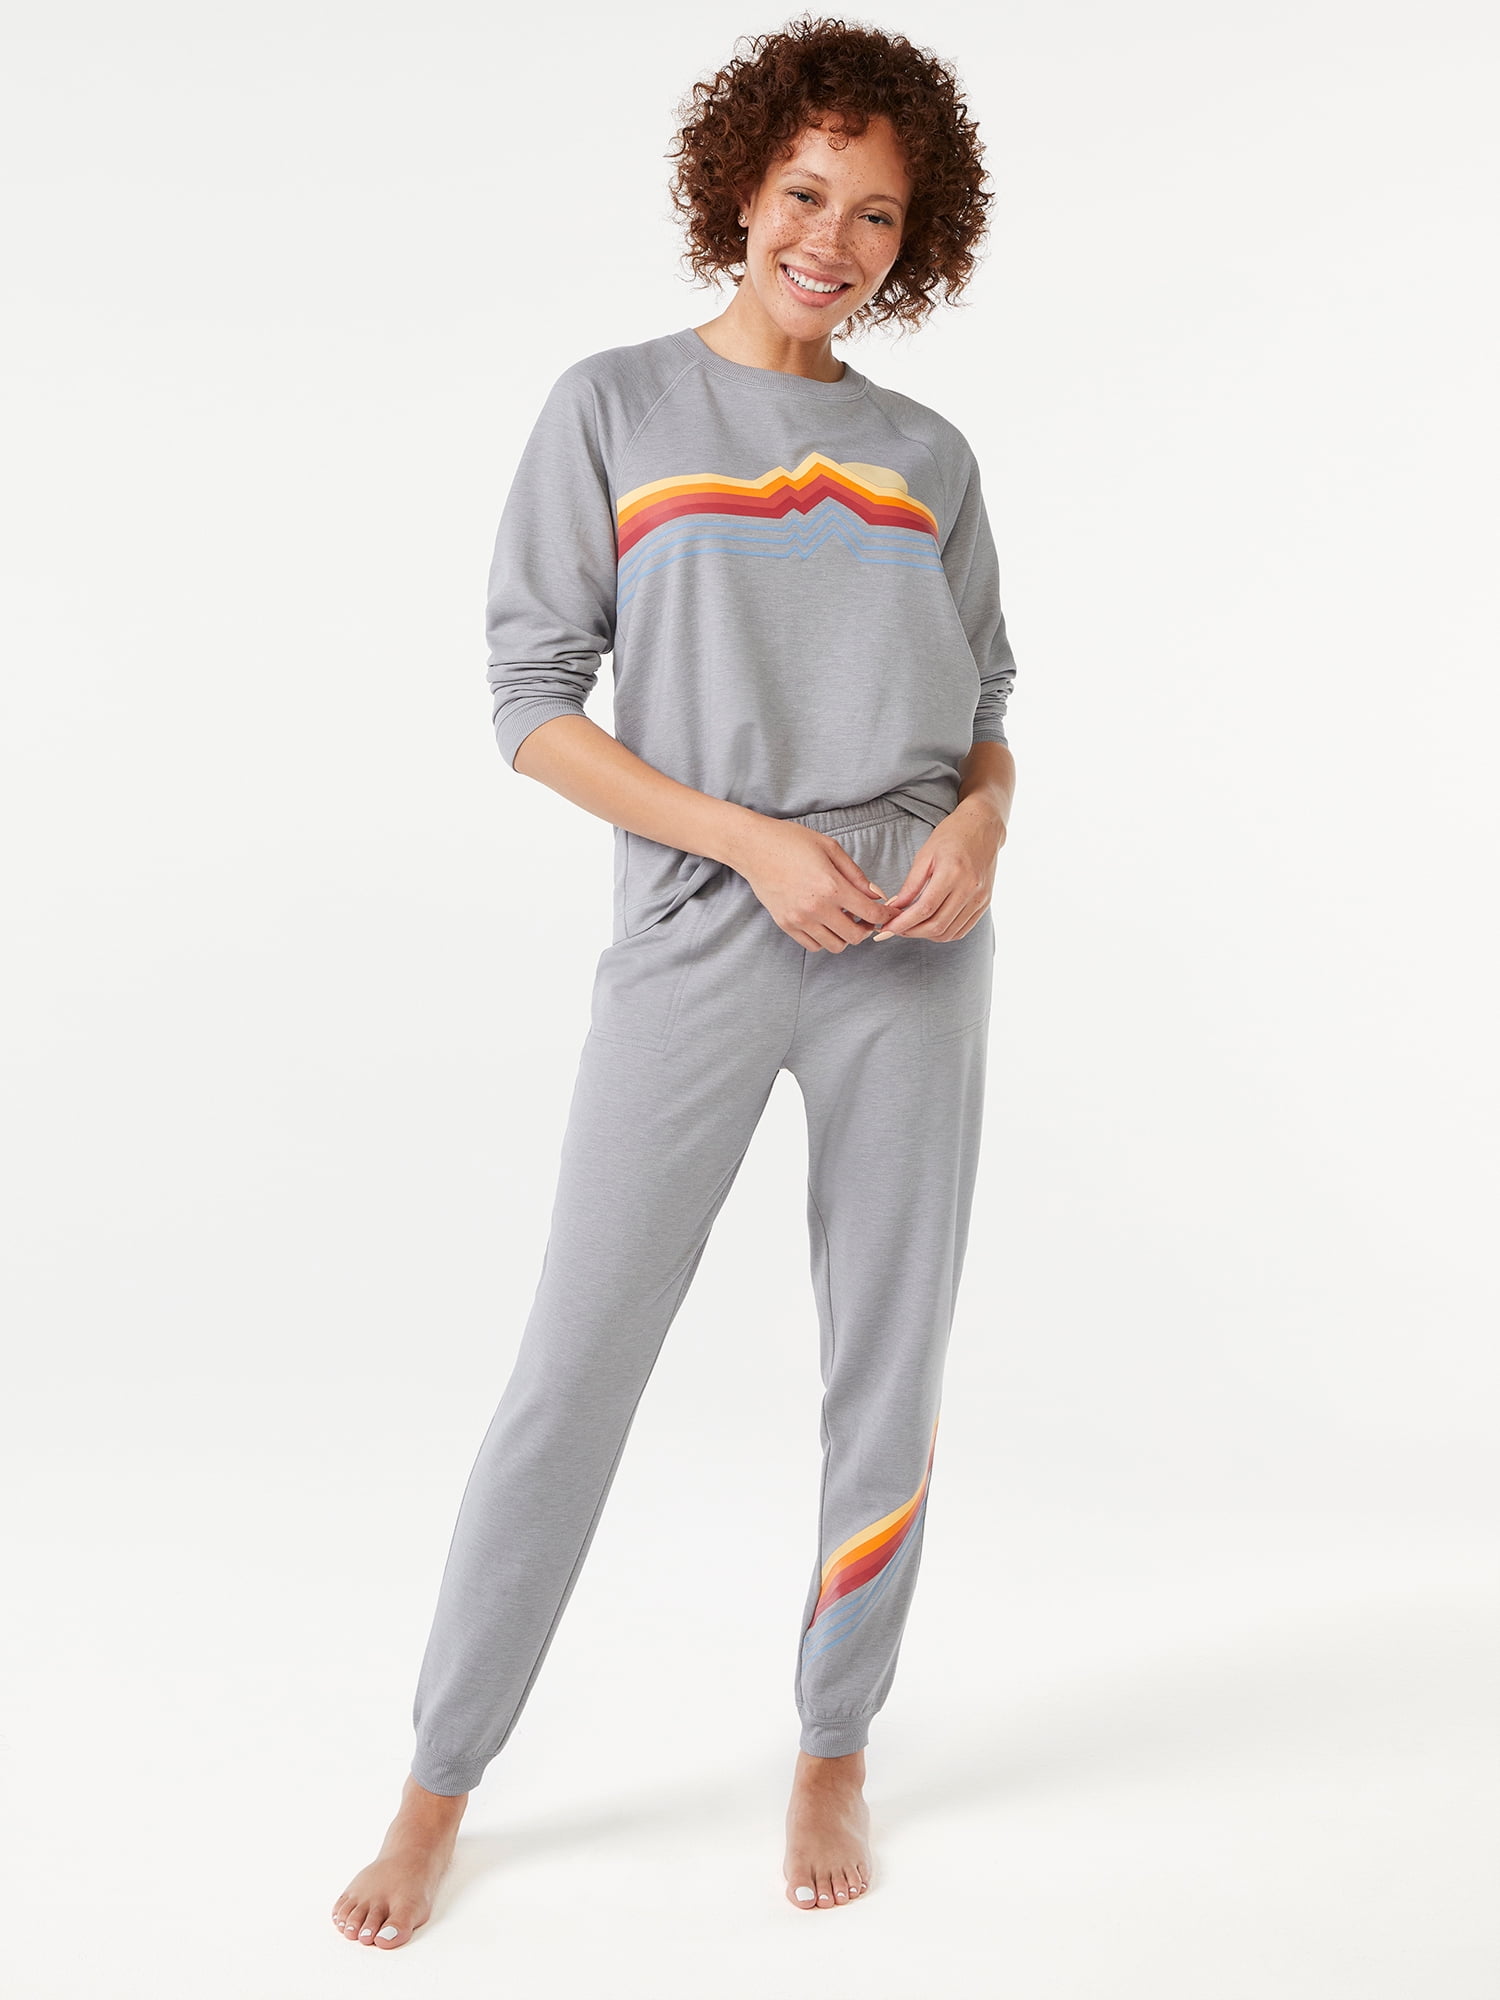 Joyspun Women's French Terry Holiday Pajama Gift Set, 2-Piece